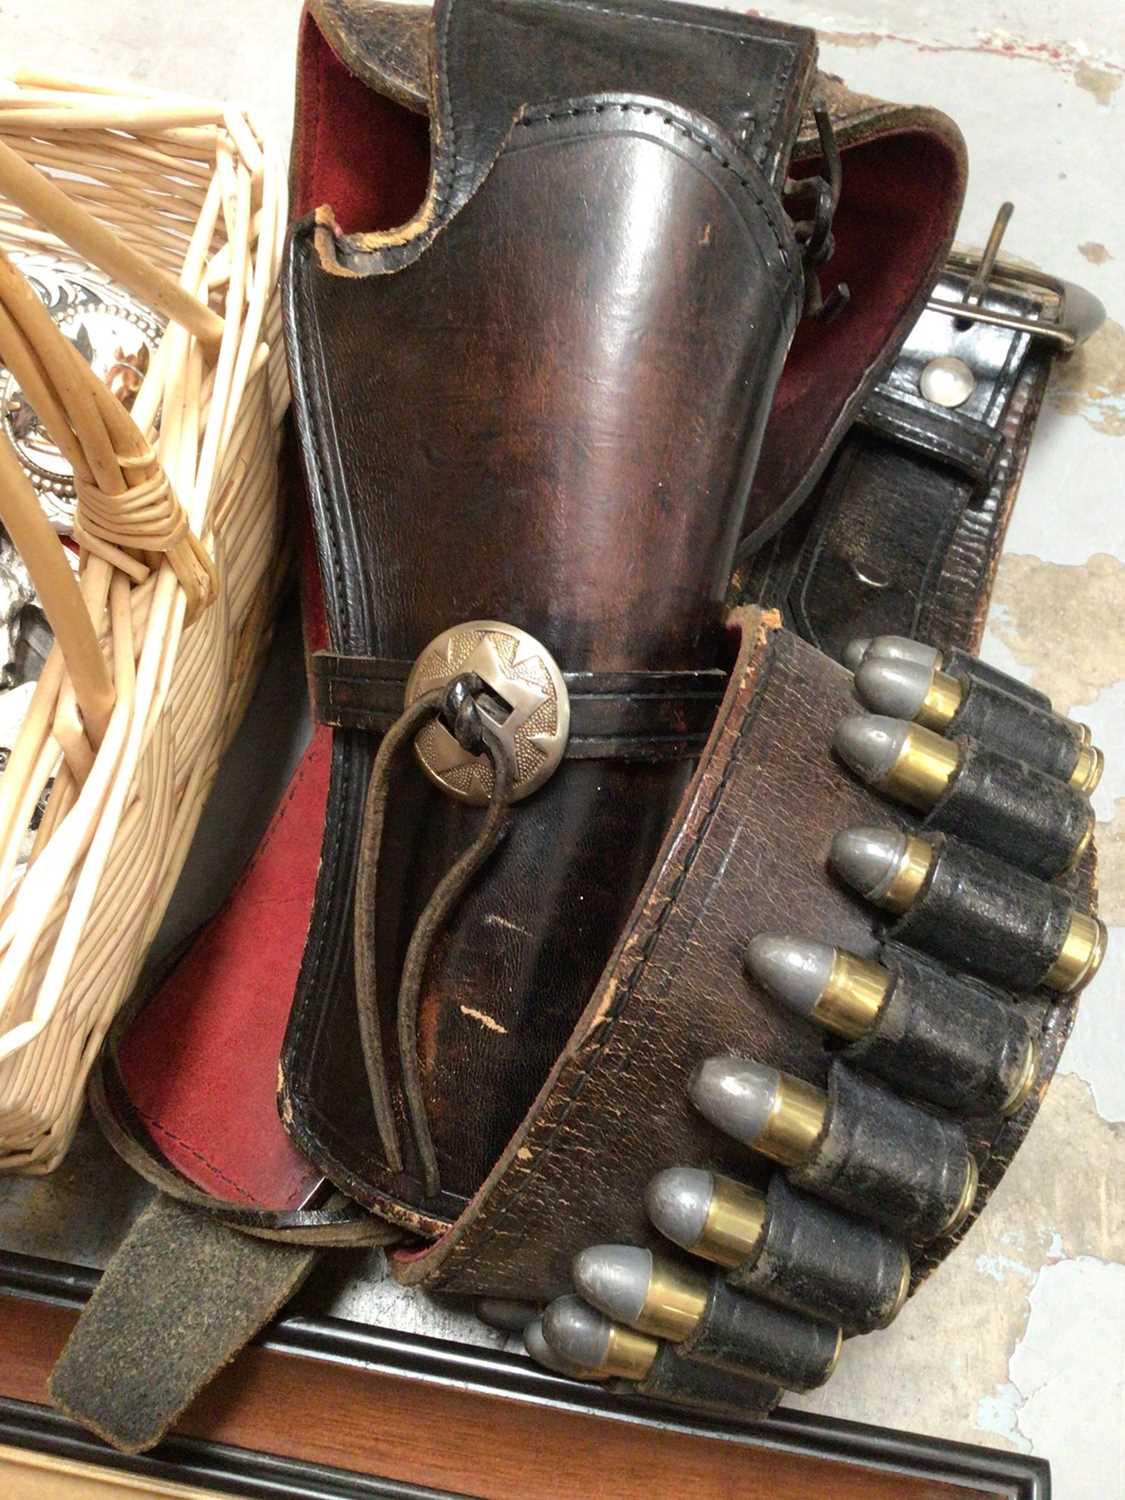 John Wayne replica gun, leather holster, various belt buckles, penknives, lighters etc - Image 3 of 5